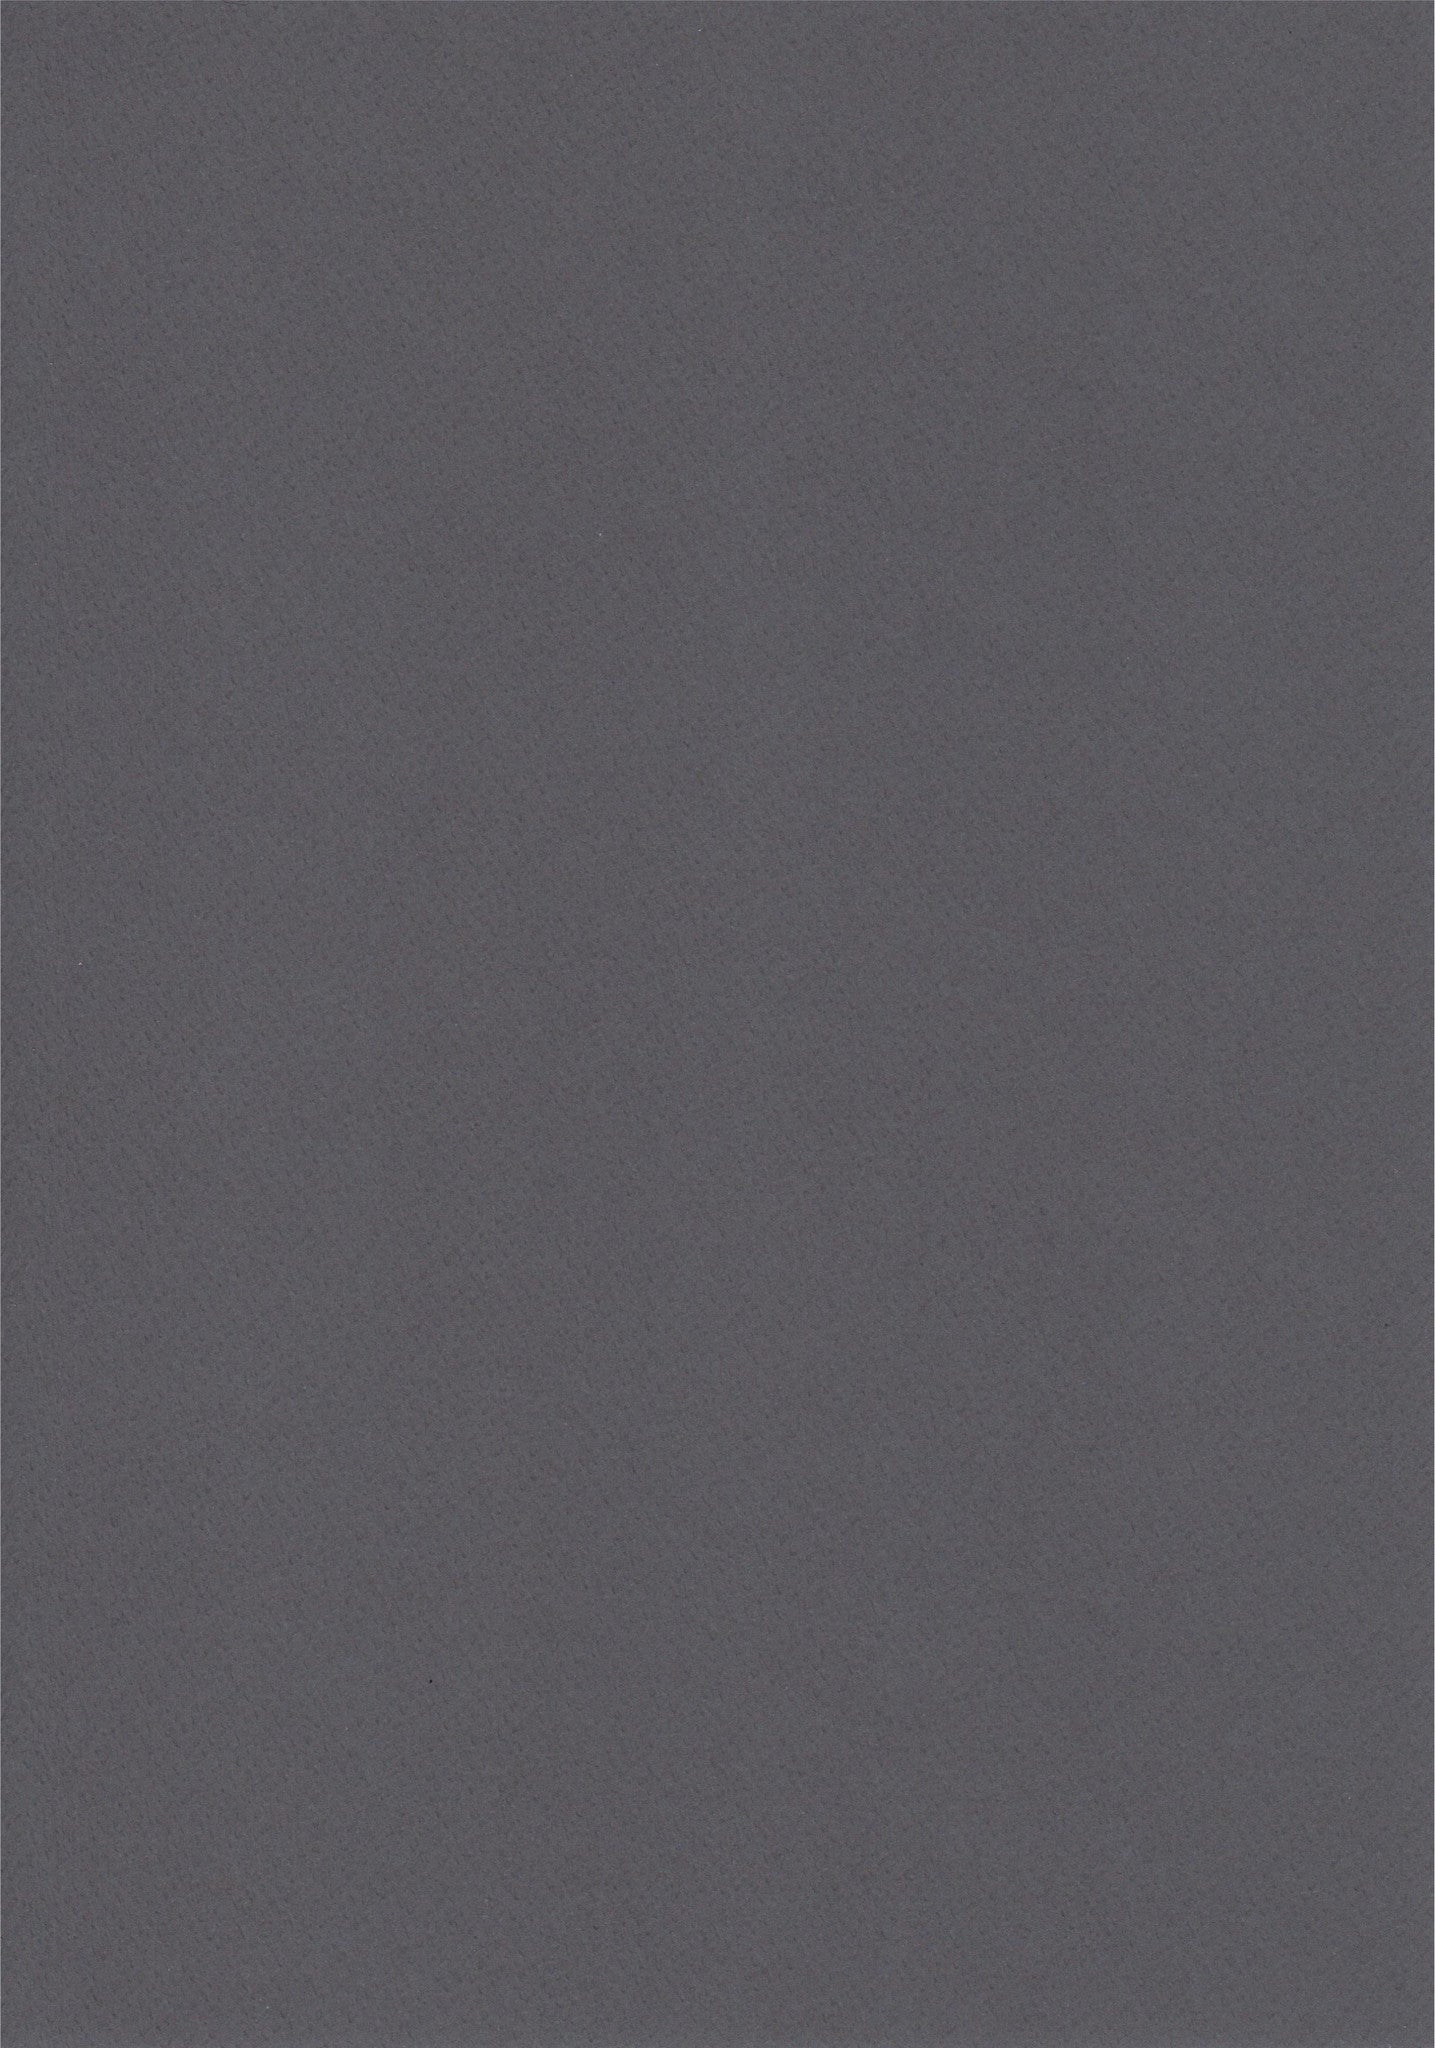 Dark Grey A4 Card - Prismacolor dark grey lightly textured card-stock.